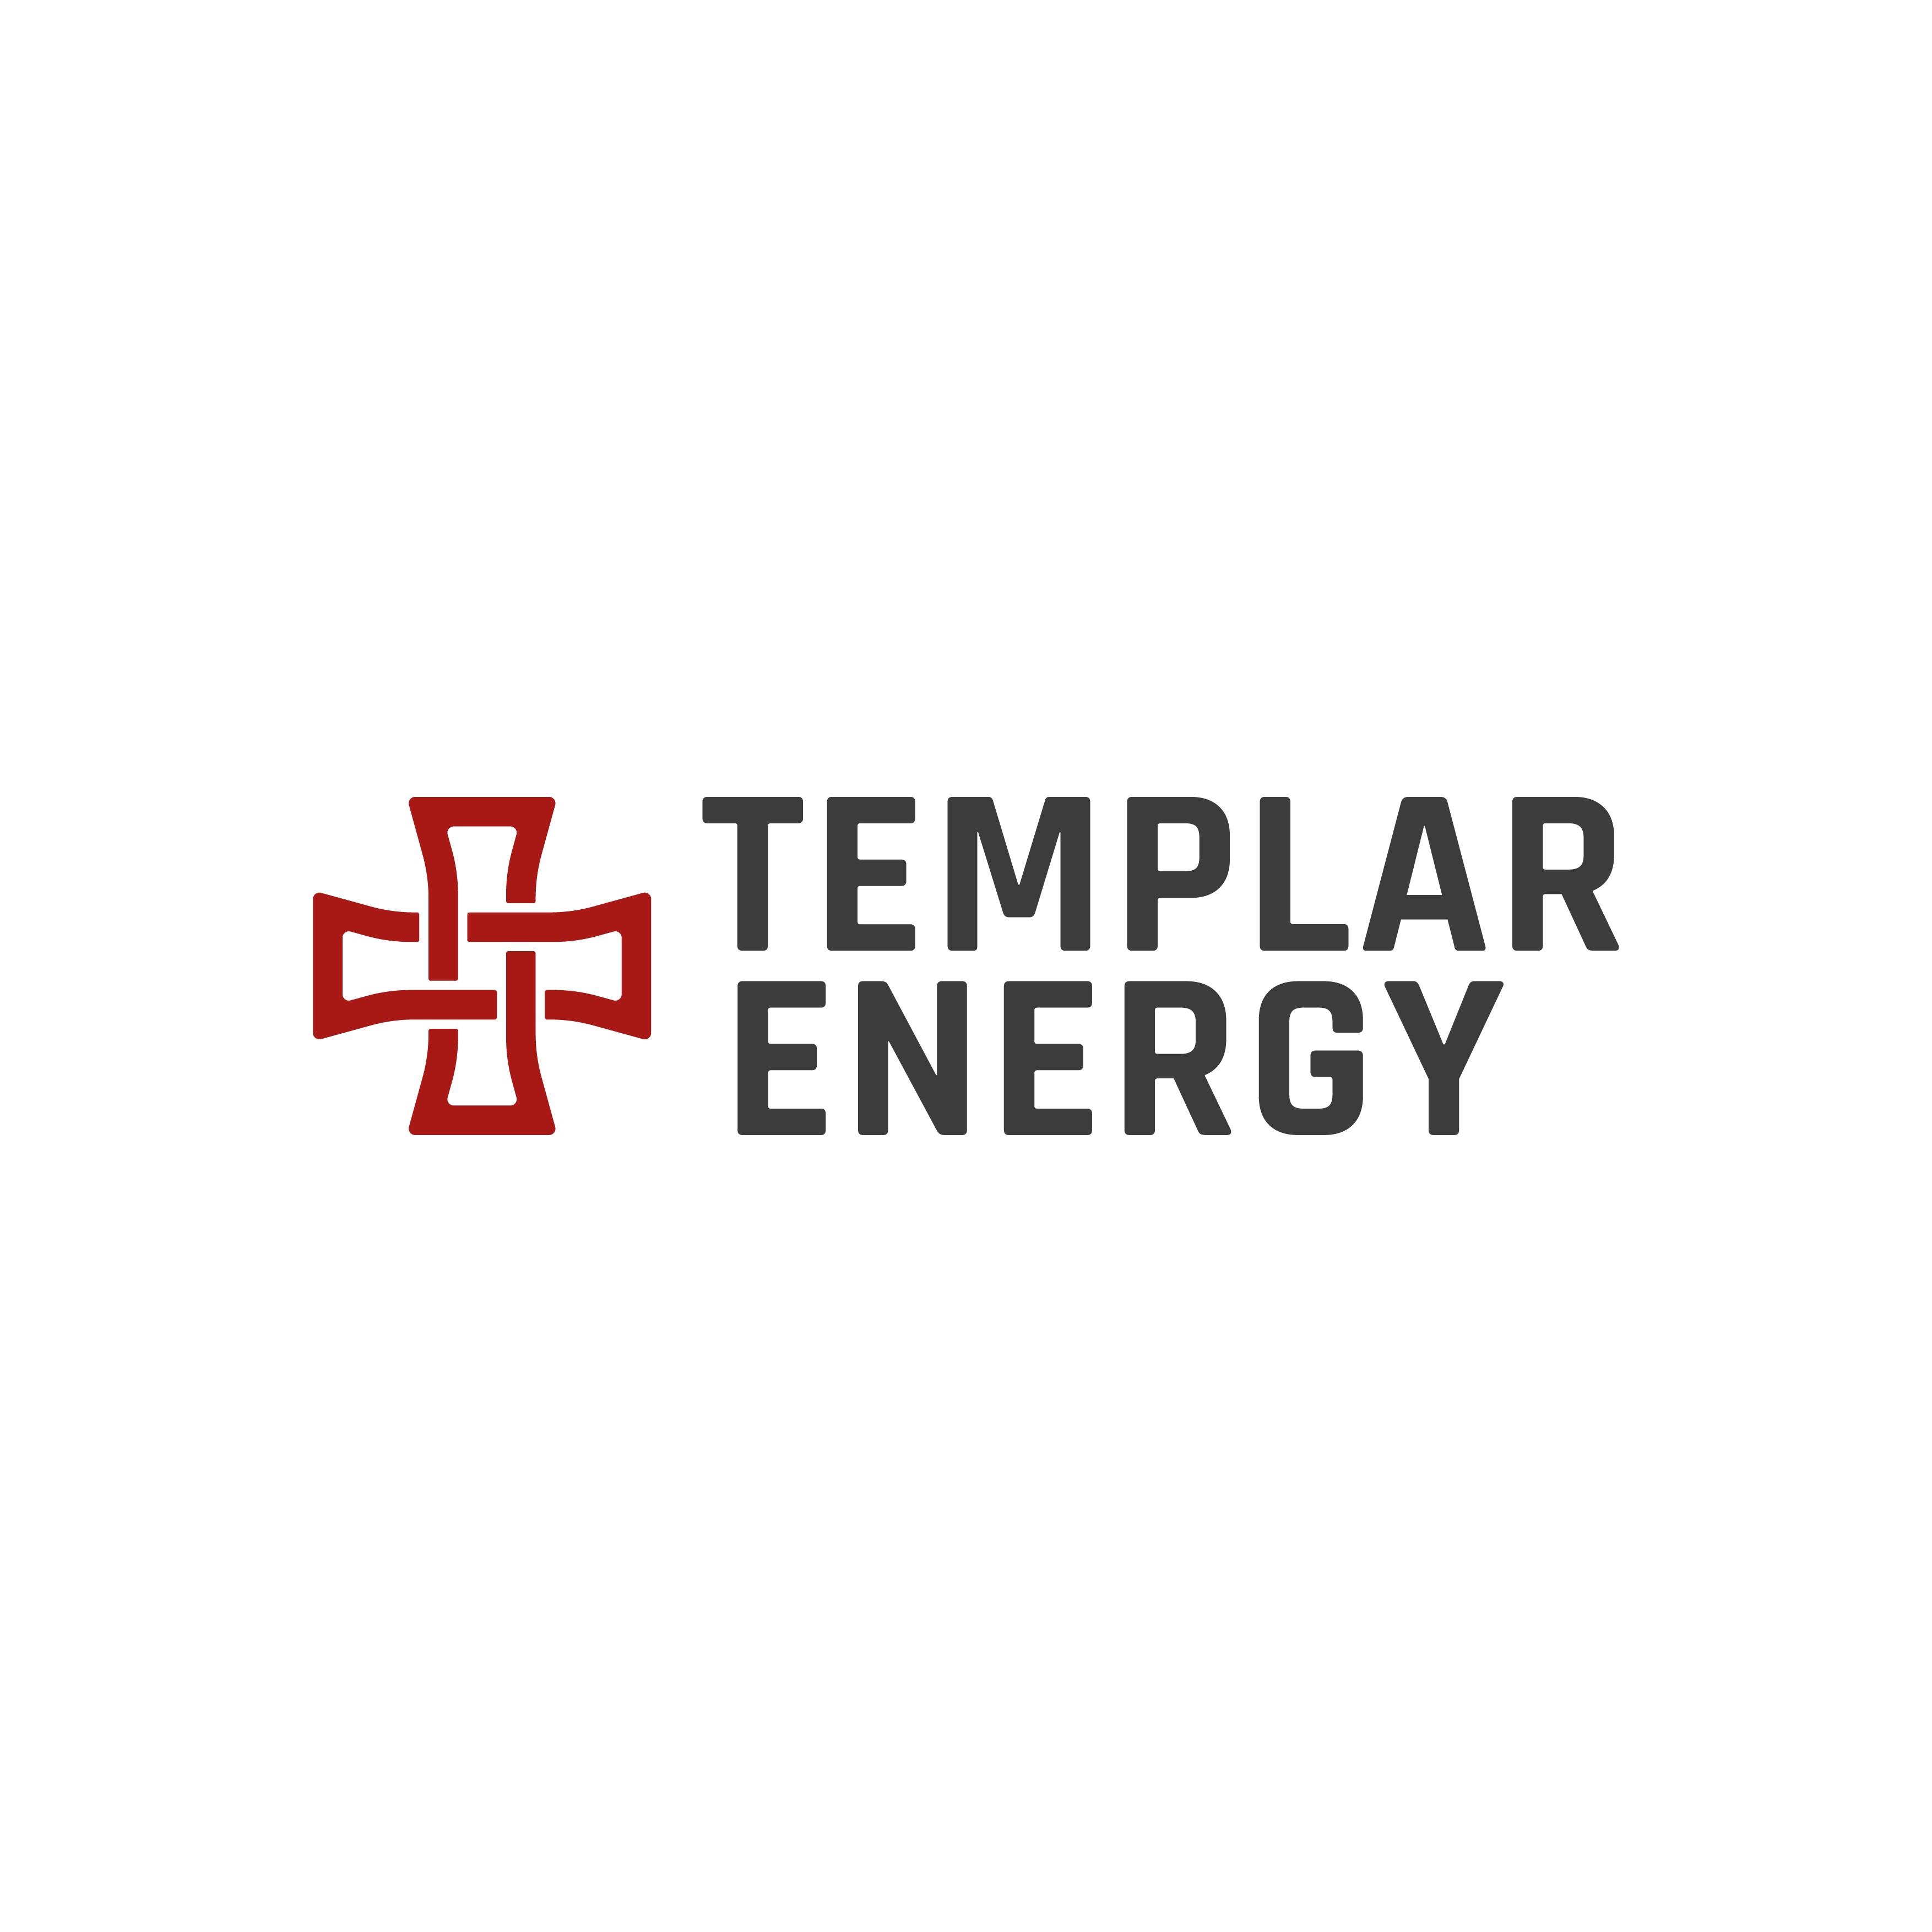 TEMPLAR ENERGY LLC